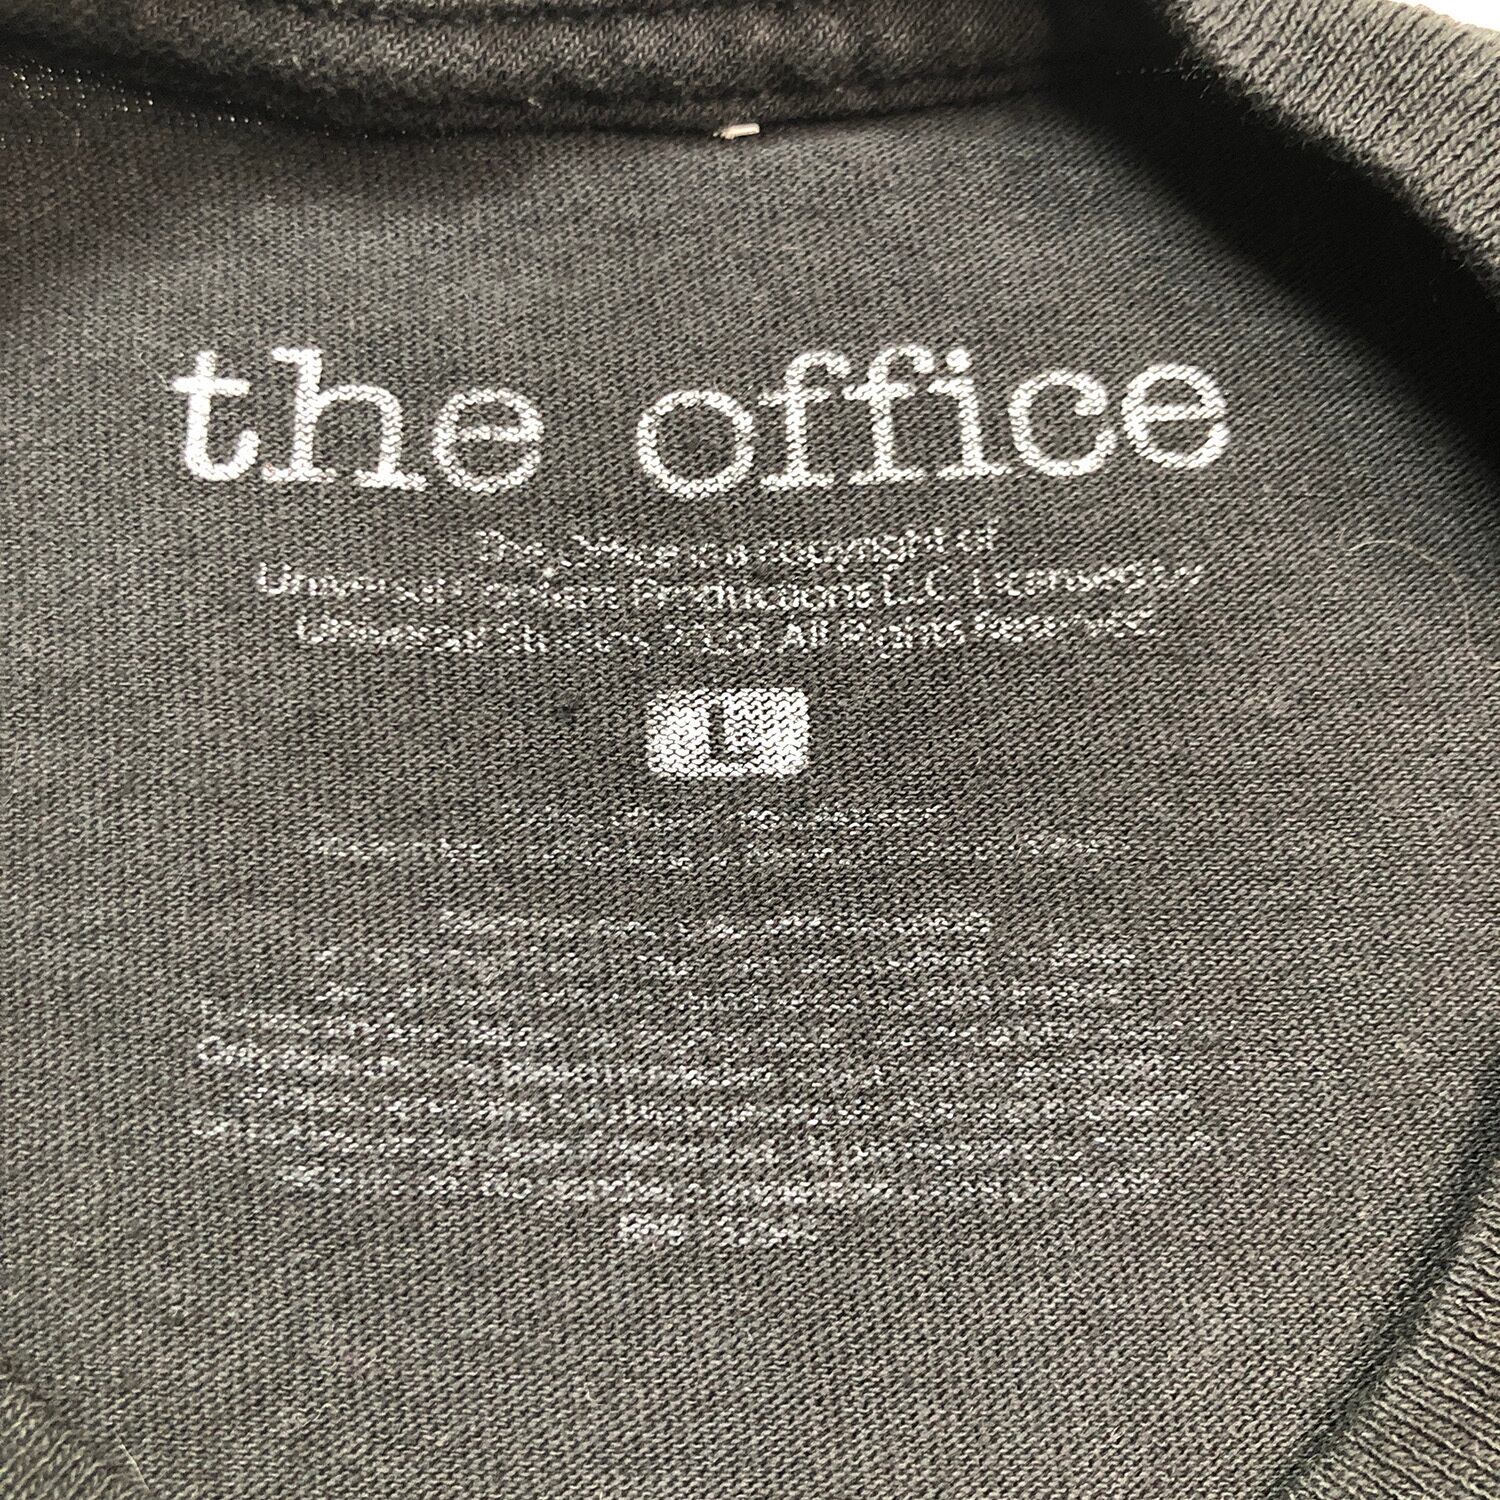 USA【アメリカ❗️】TシャツThe Office FALSEフォトプリント